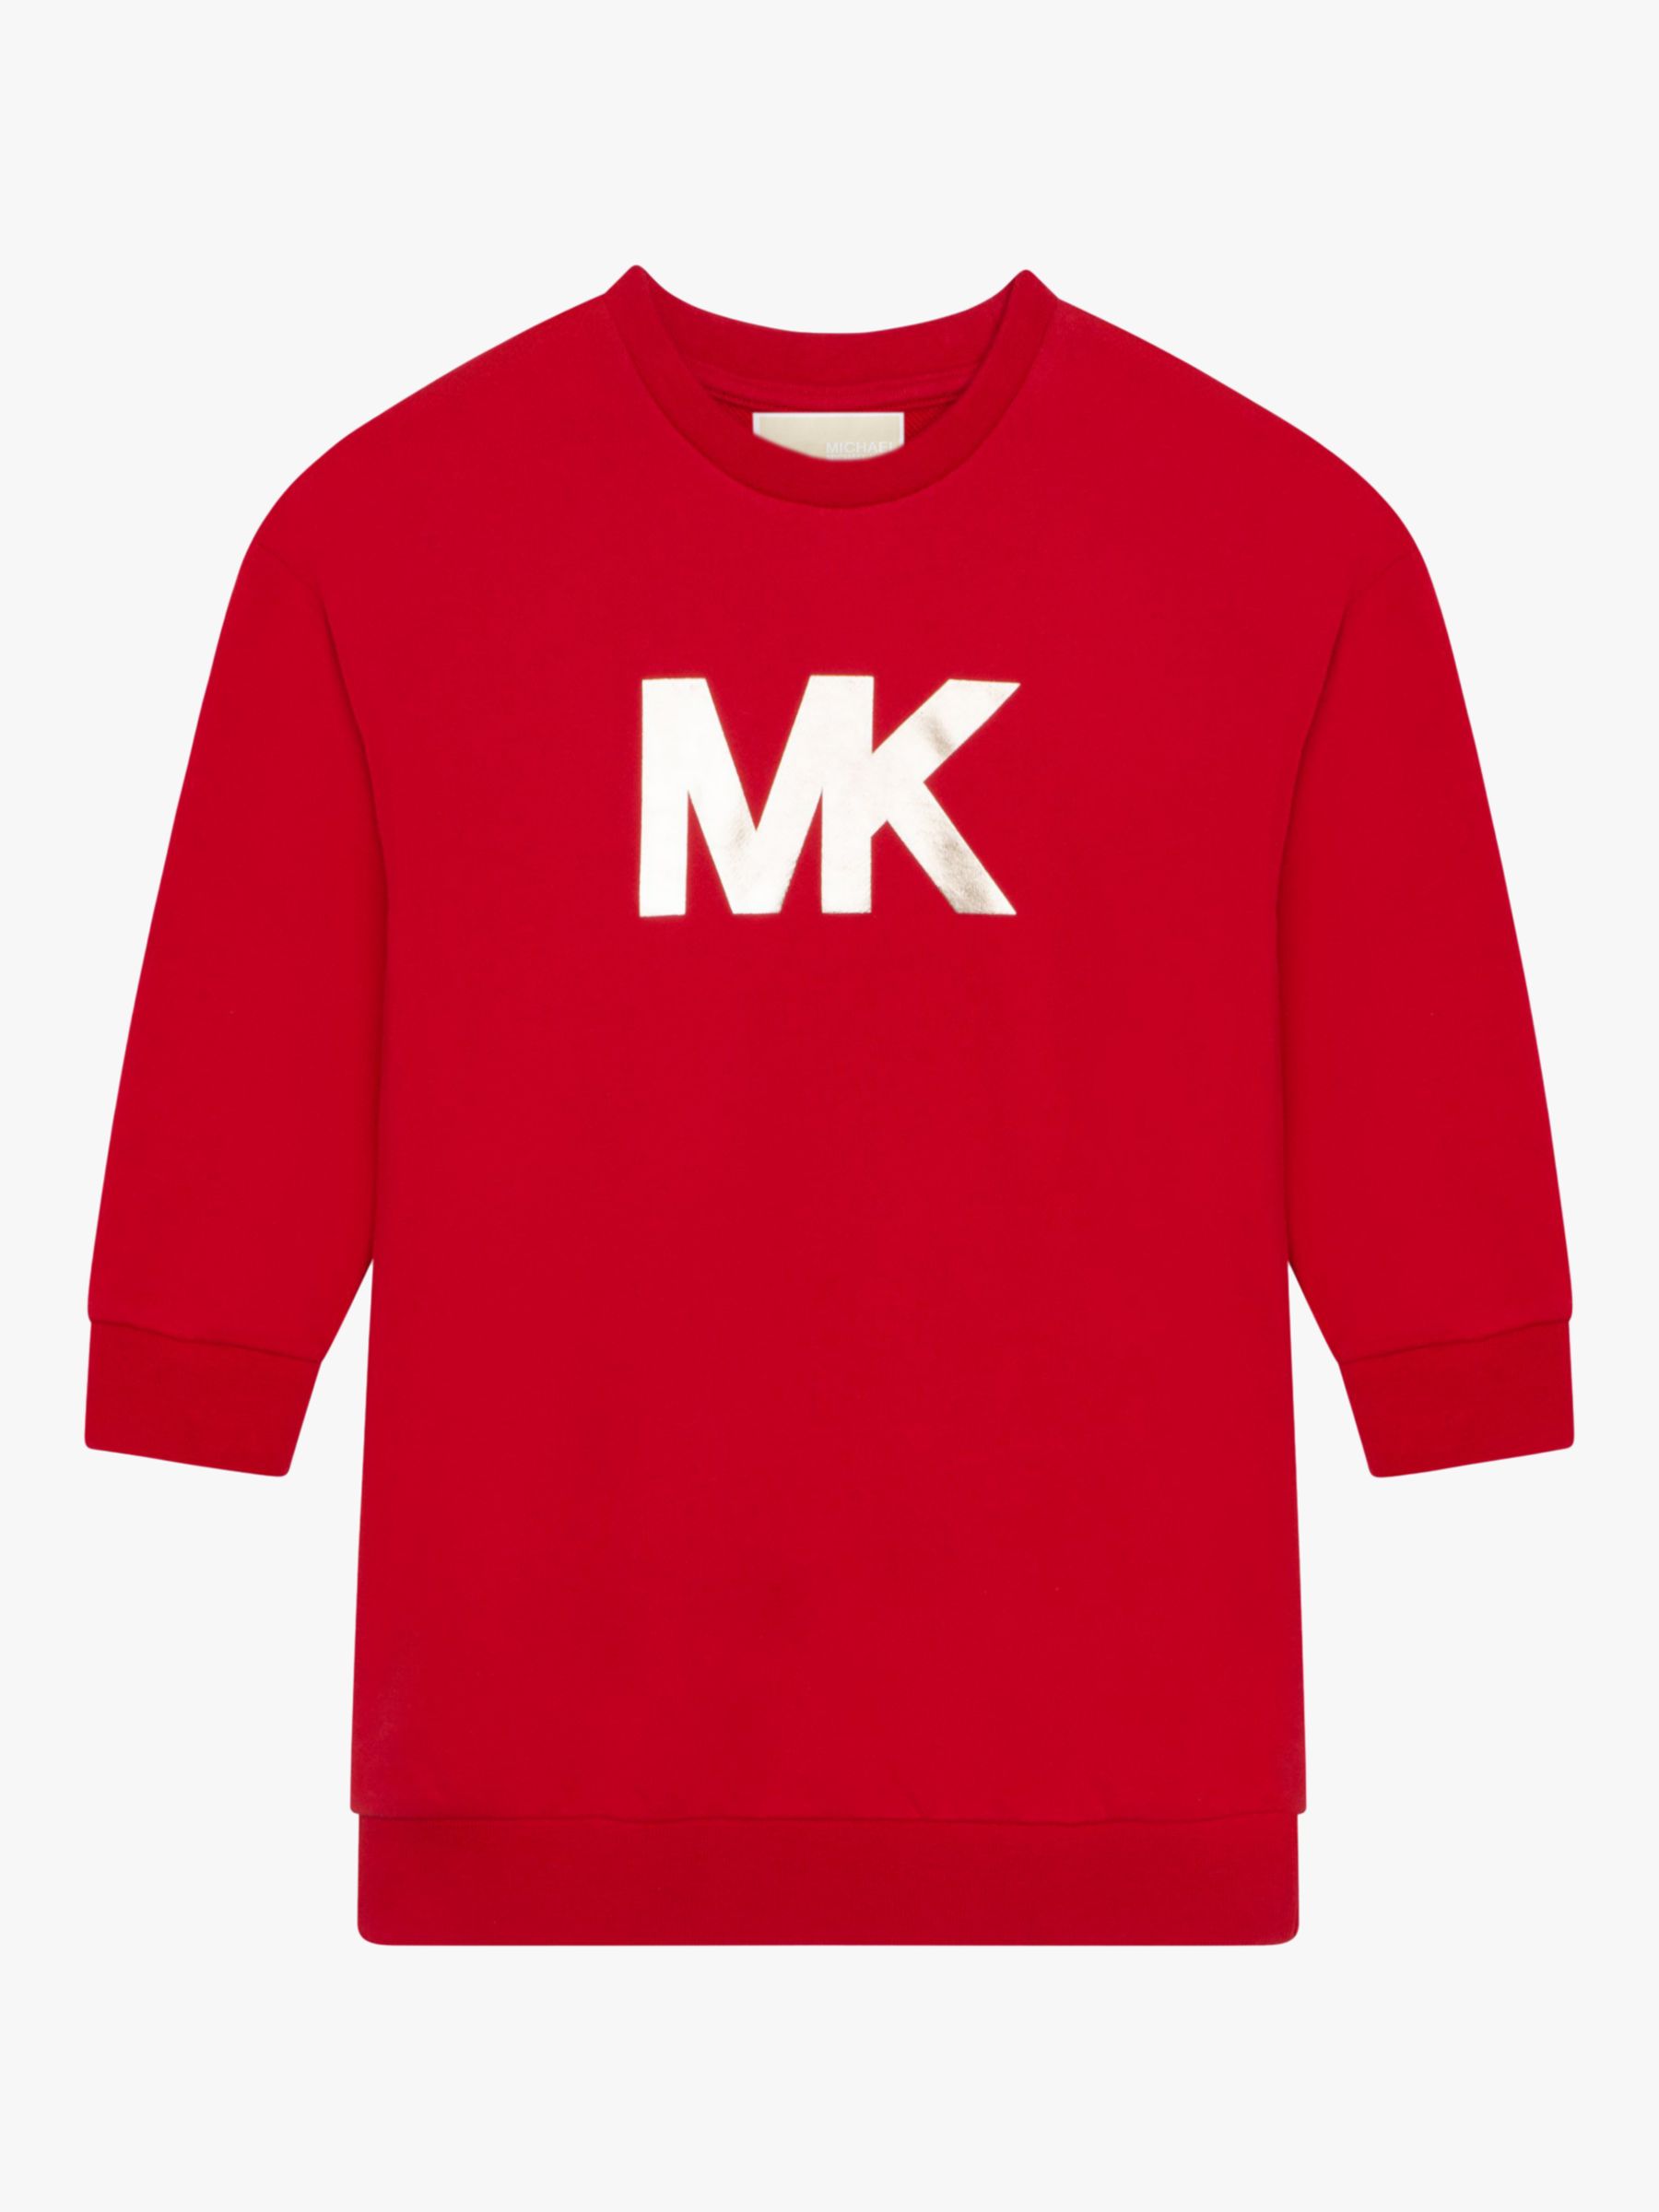 Michael Kors Kids' Plain Logo Jumper Dress, Bright Red, 4 years